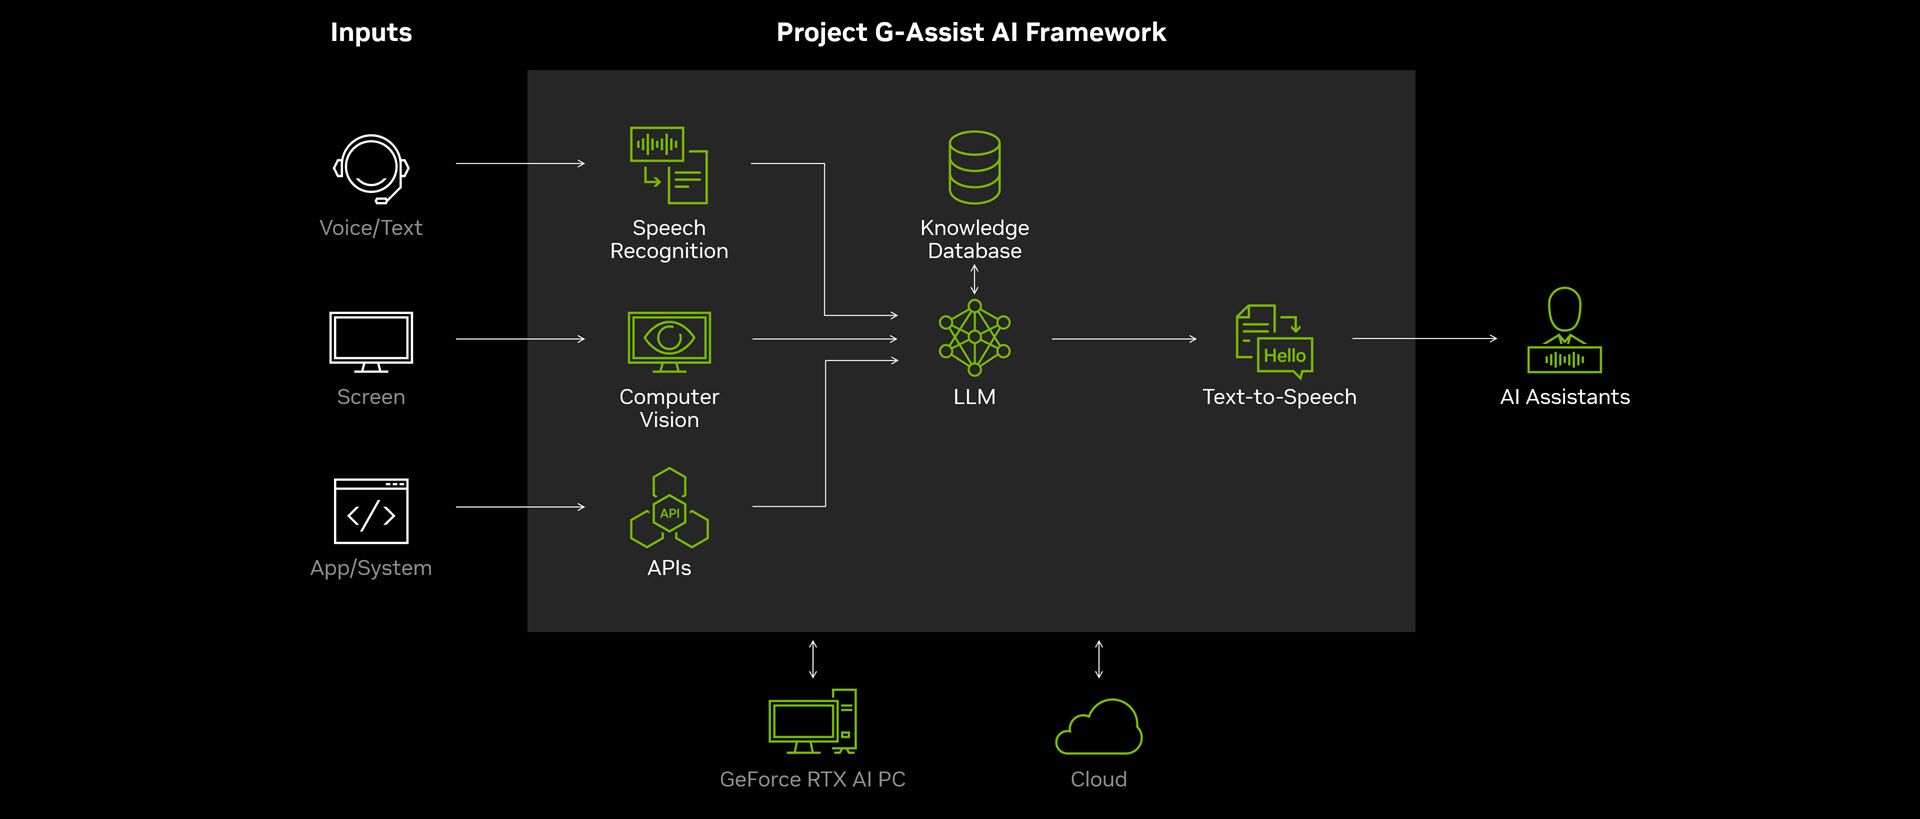 nvidia-project-g-assist-framework